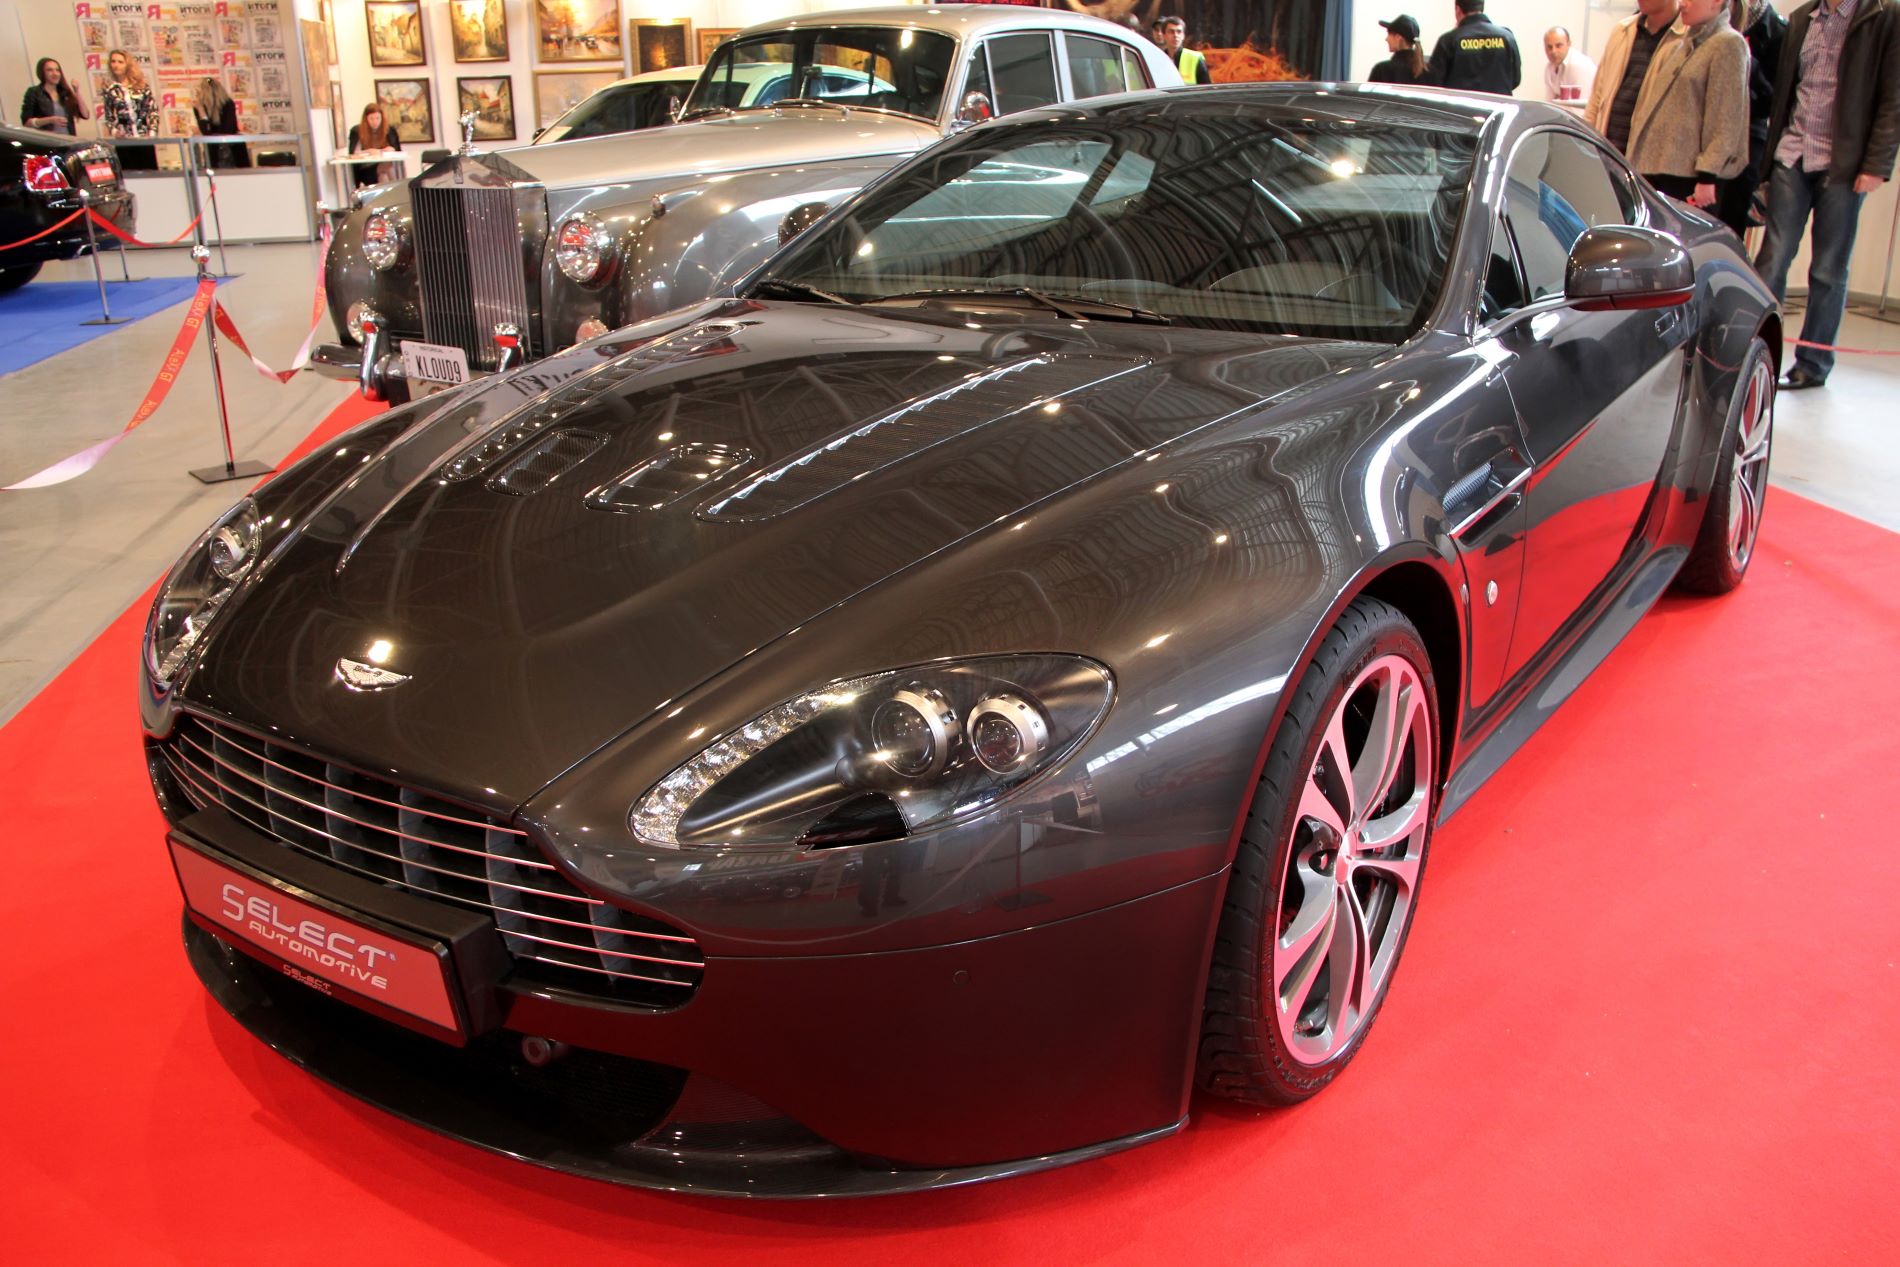 Aston Martin V8 Vantage 2005 - 2008, a British automaker's luxury sports car